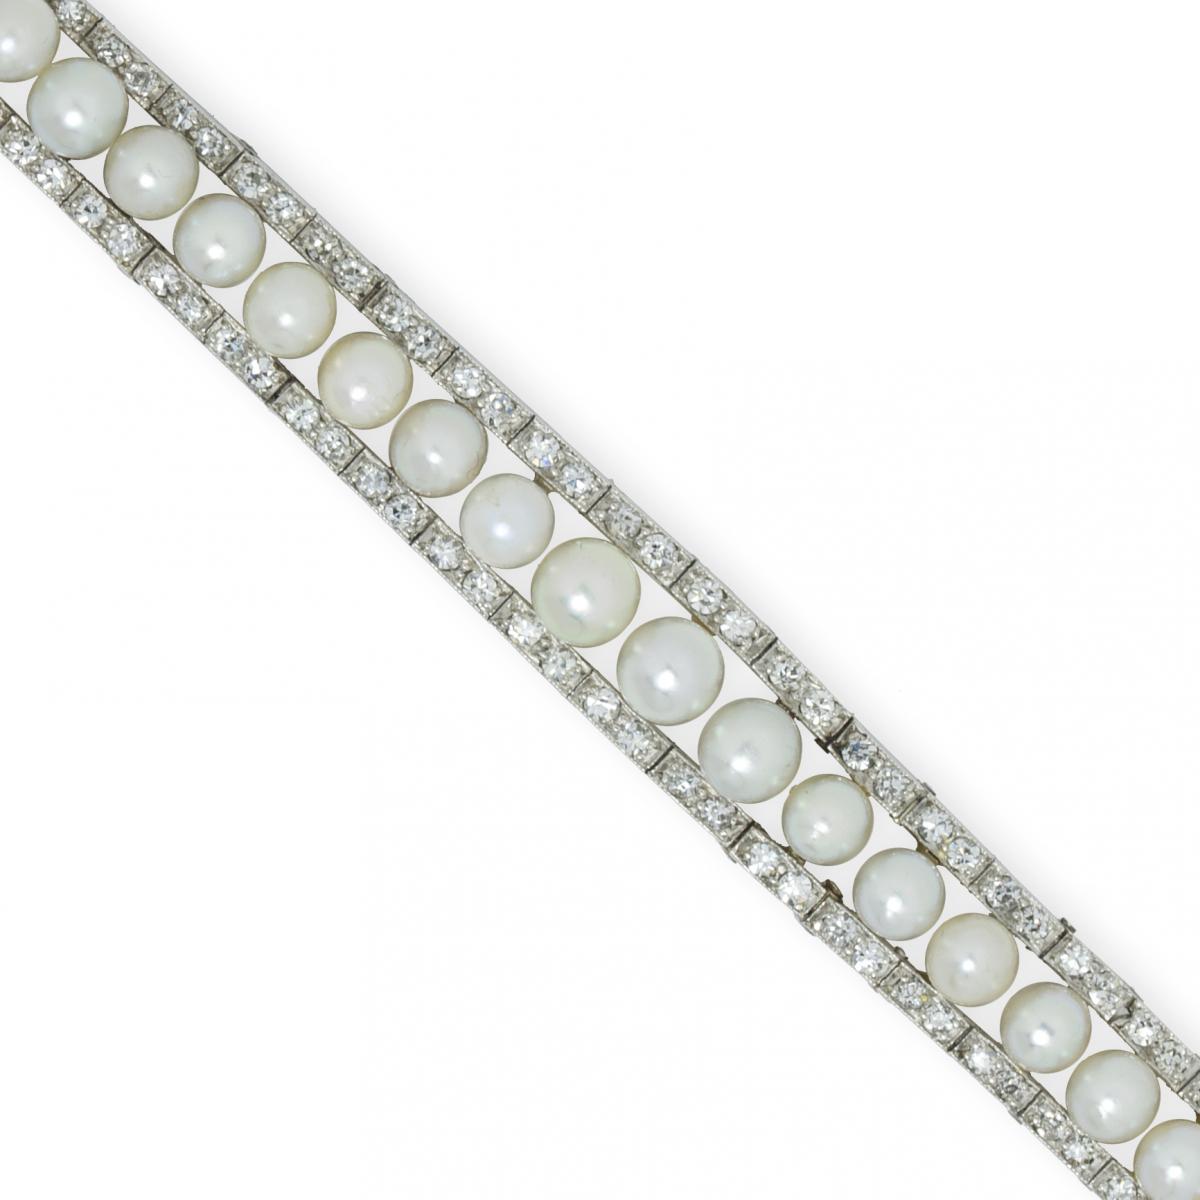 A Fine Edwardian Natural Pearl and Diamond Bracelet, Circa 1910